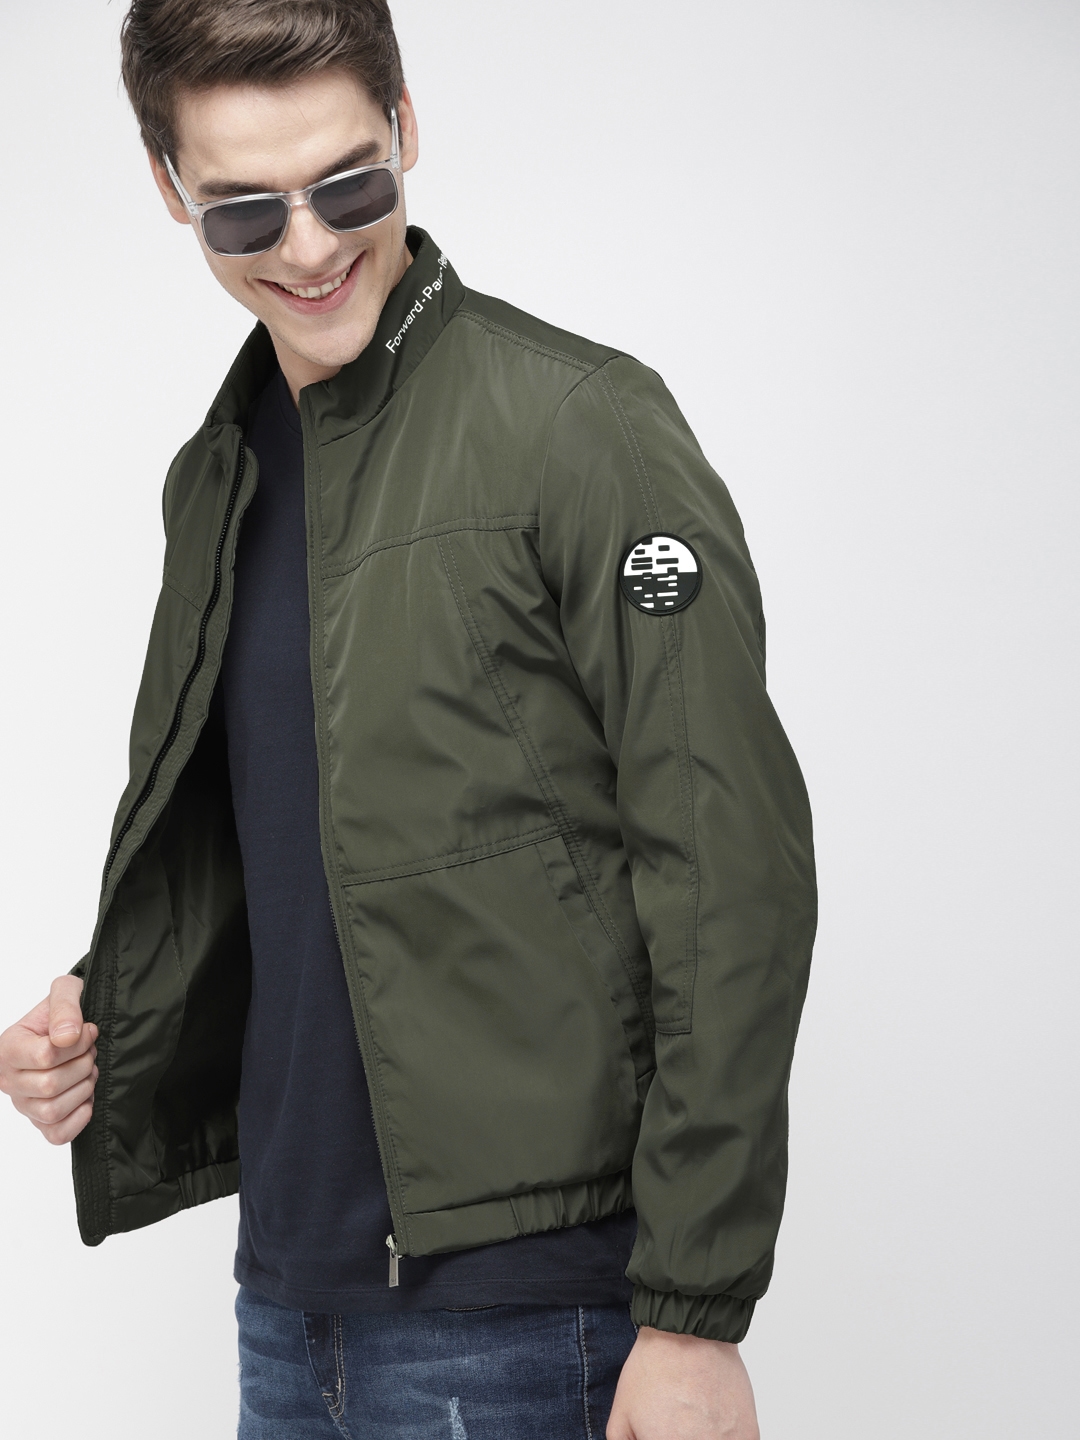 Buy Men Green Solid Casual Jacket Online - 788976 | Peter England-seedfund.vn